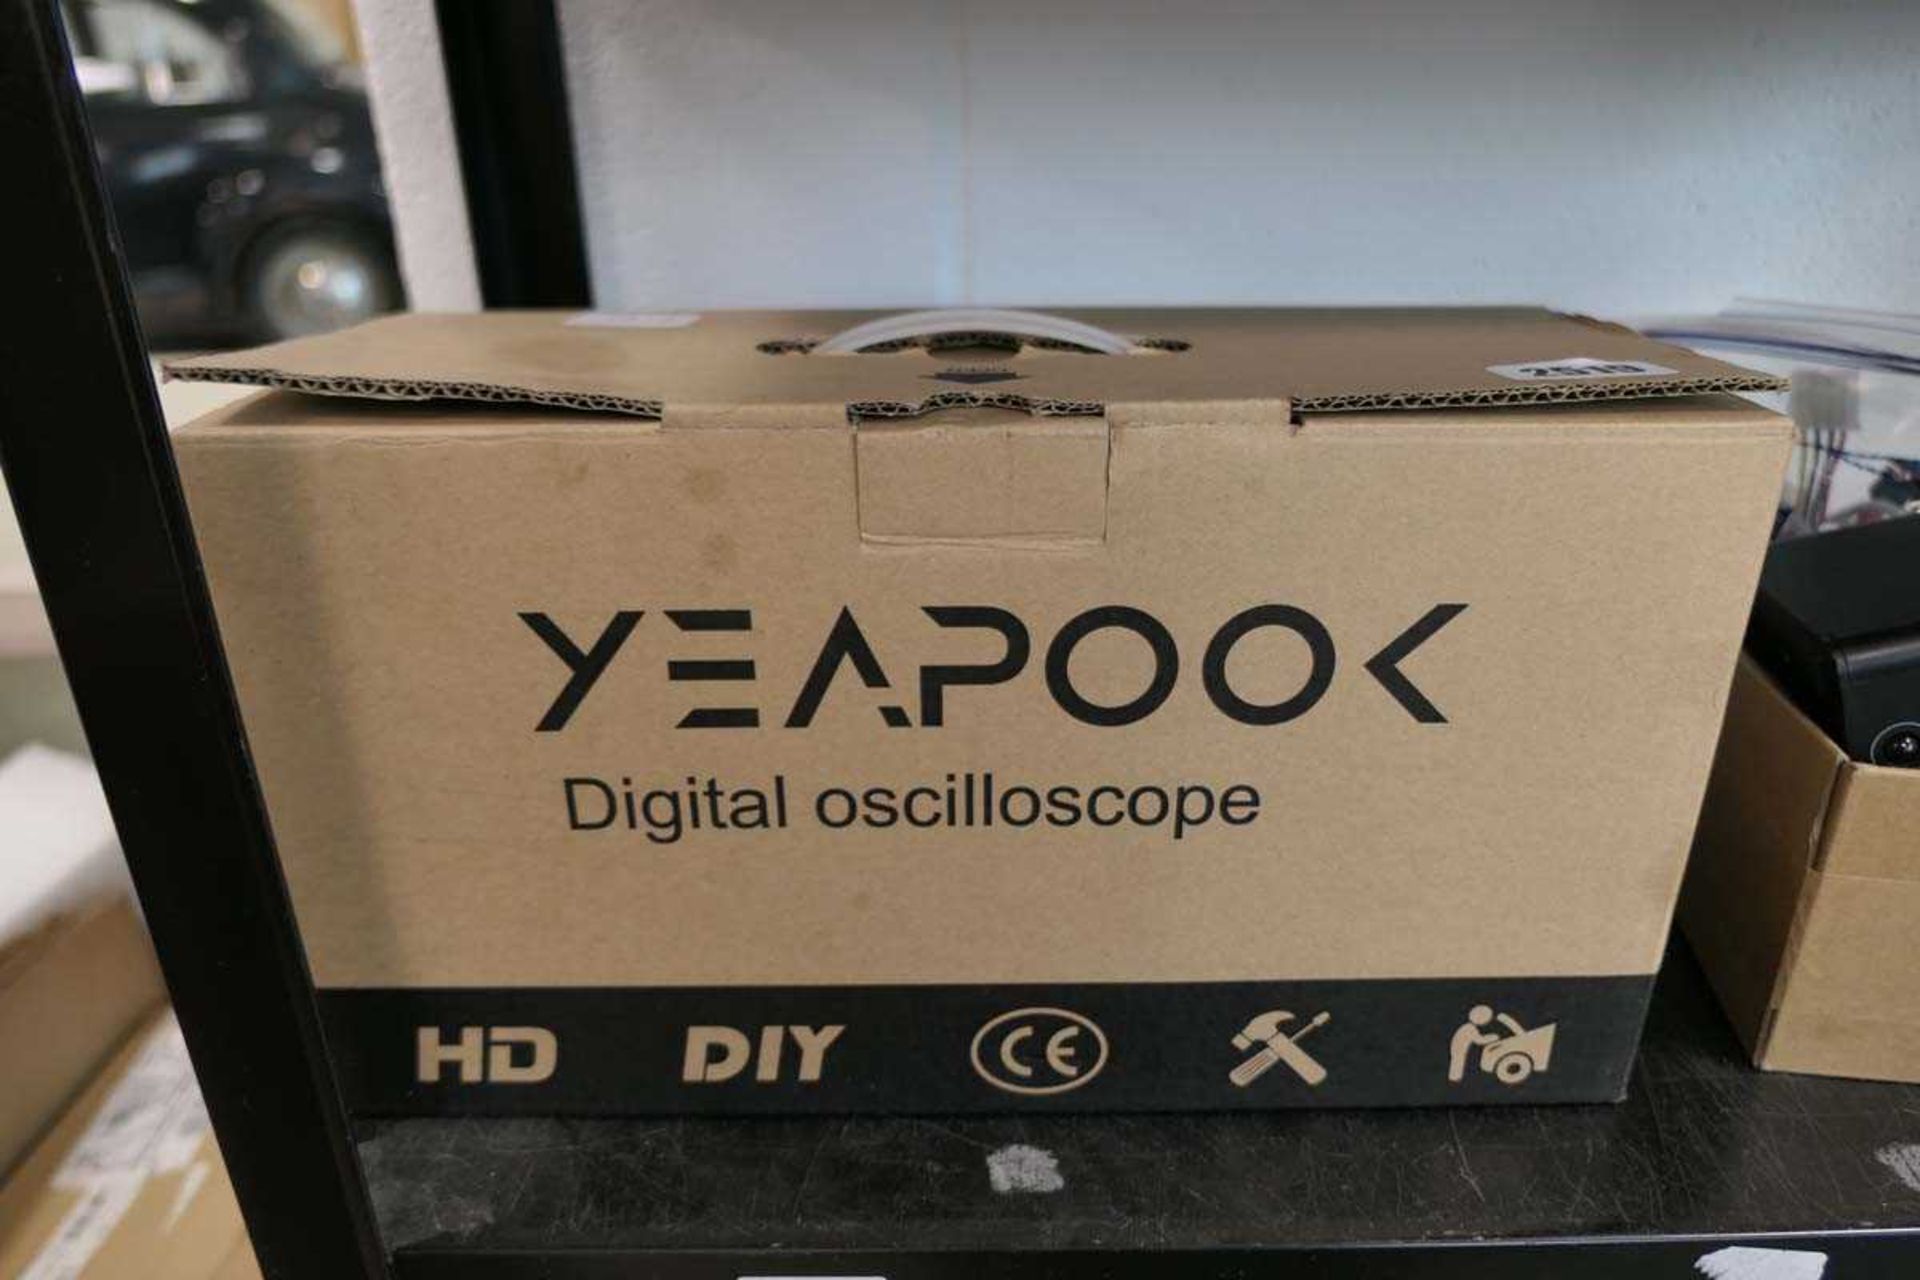 Boxed digital oscilloscope